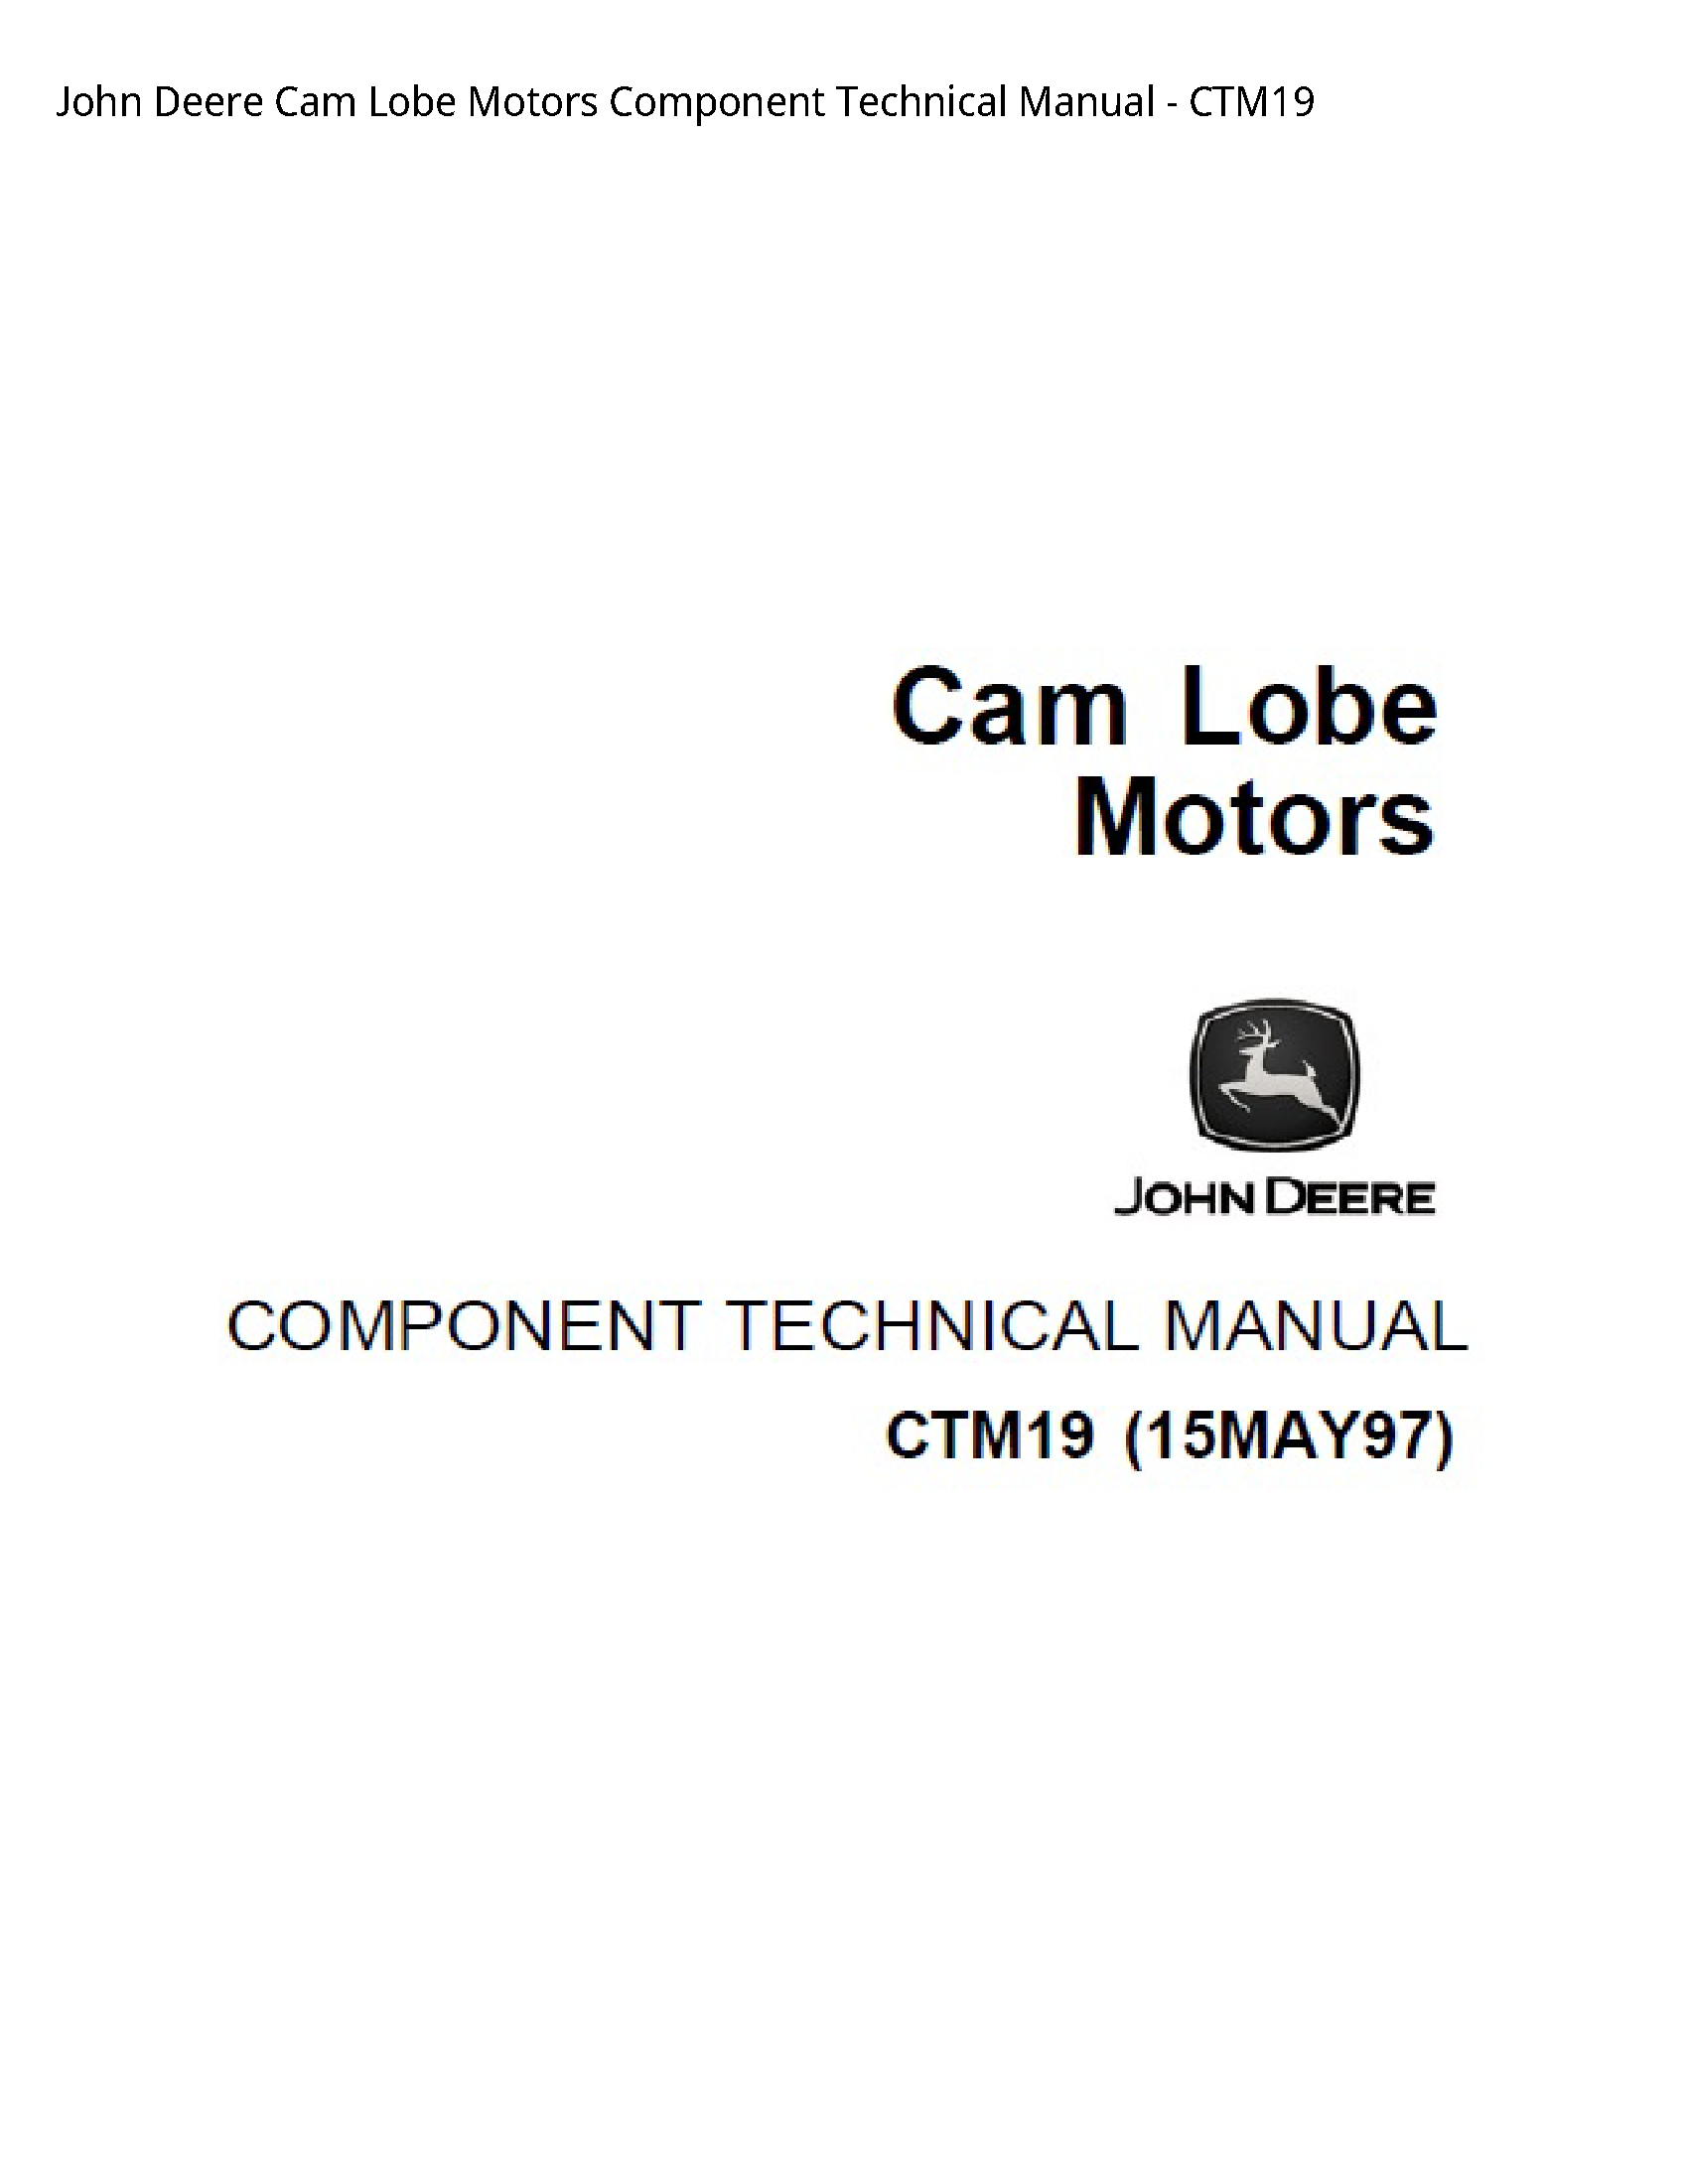 John Deere Cam Lobe Motors Component Technical manual